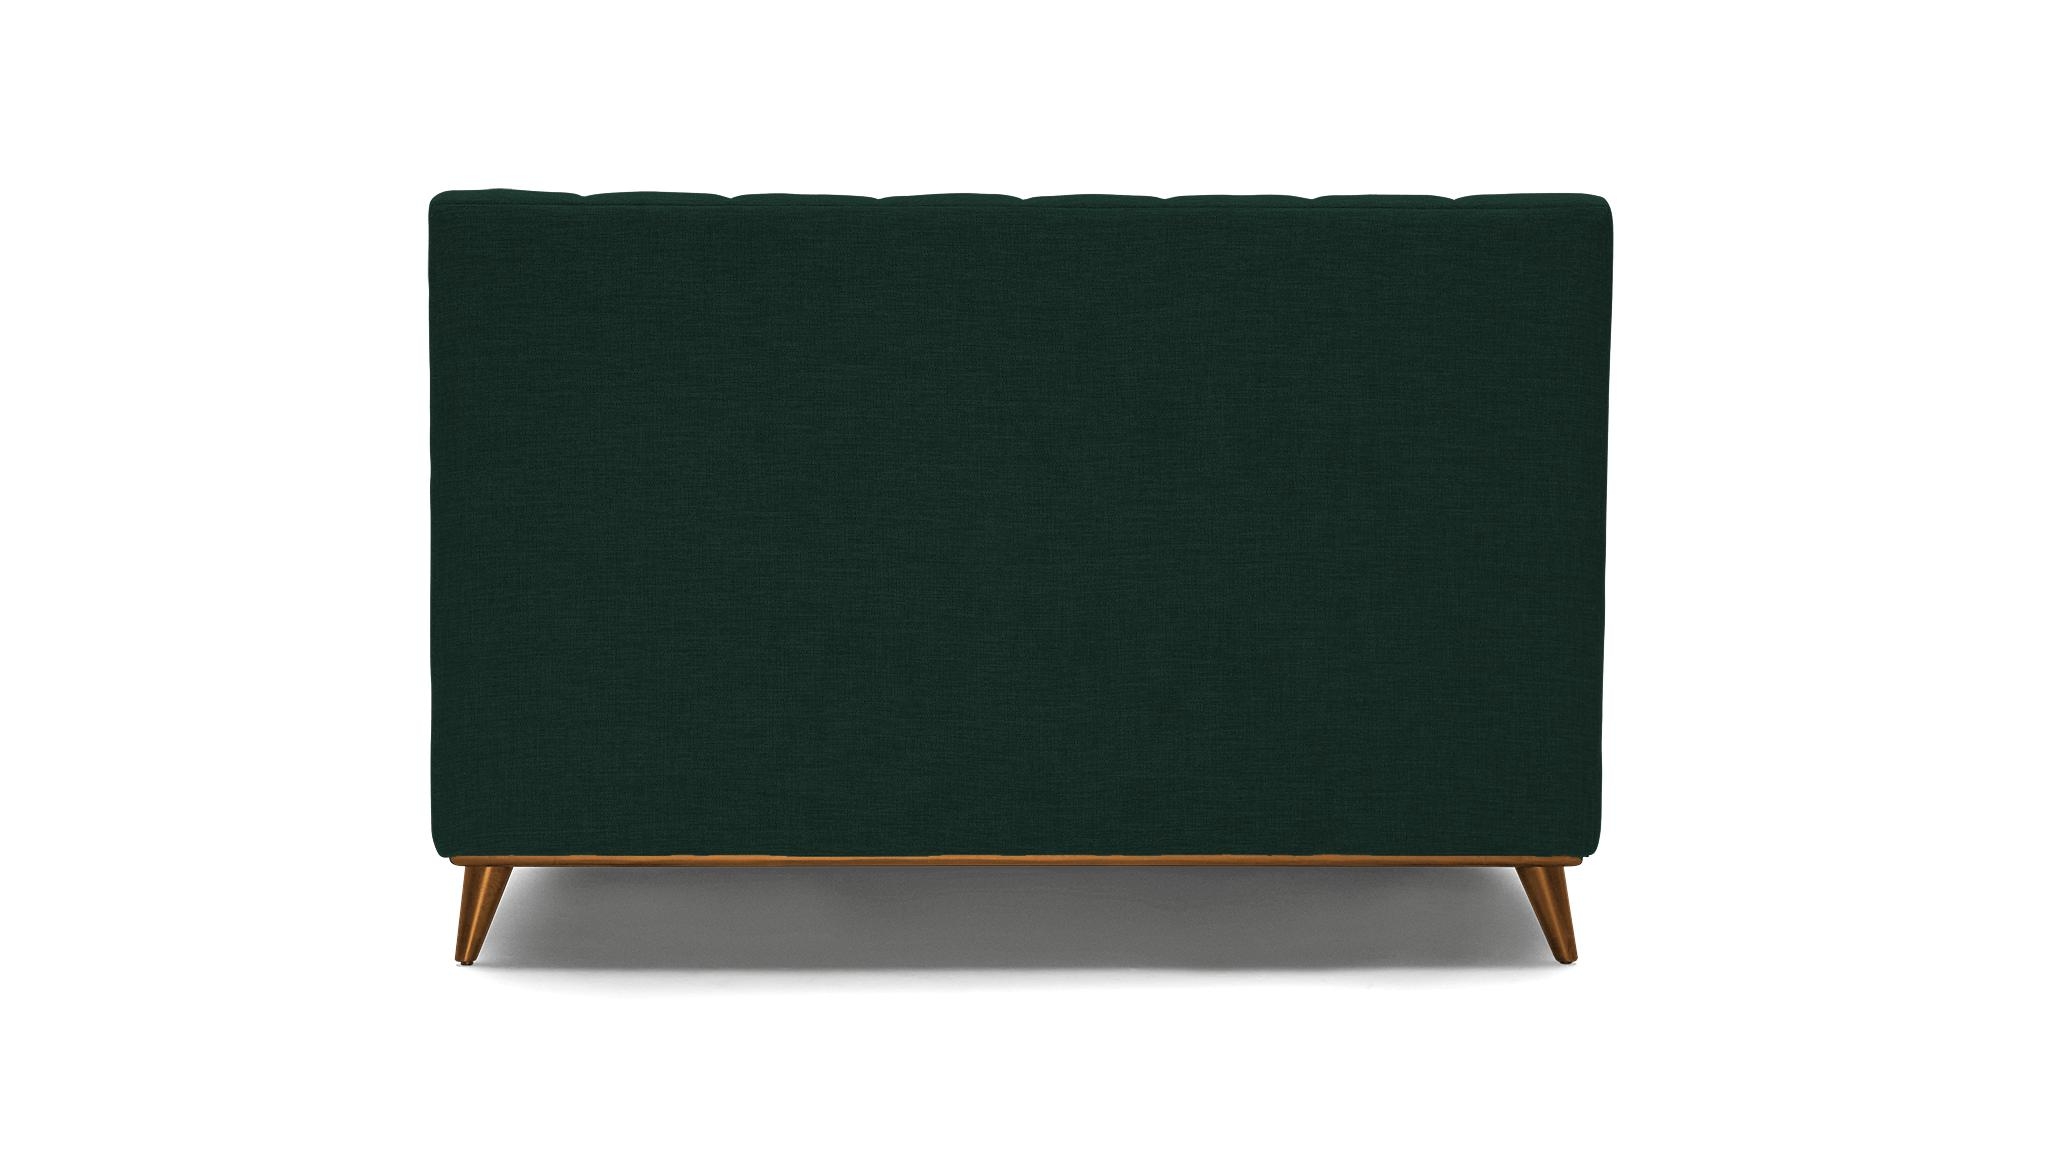 Green Hughes Mid Century Modern Bed - Royale Evergreen - Mocha - Eastern King - Image 4